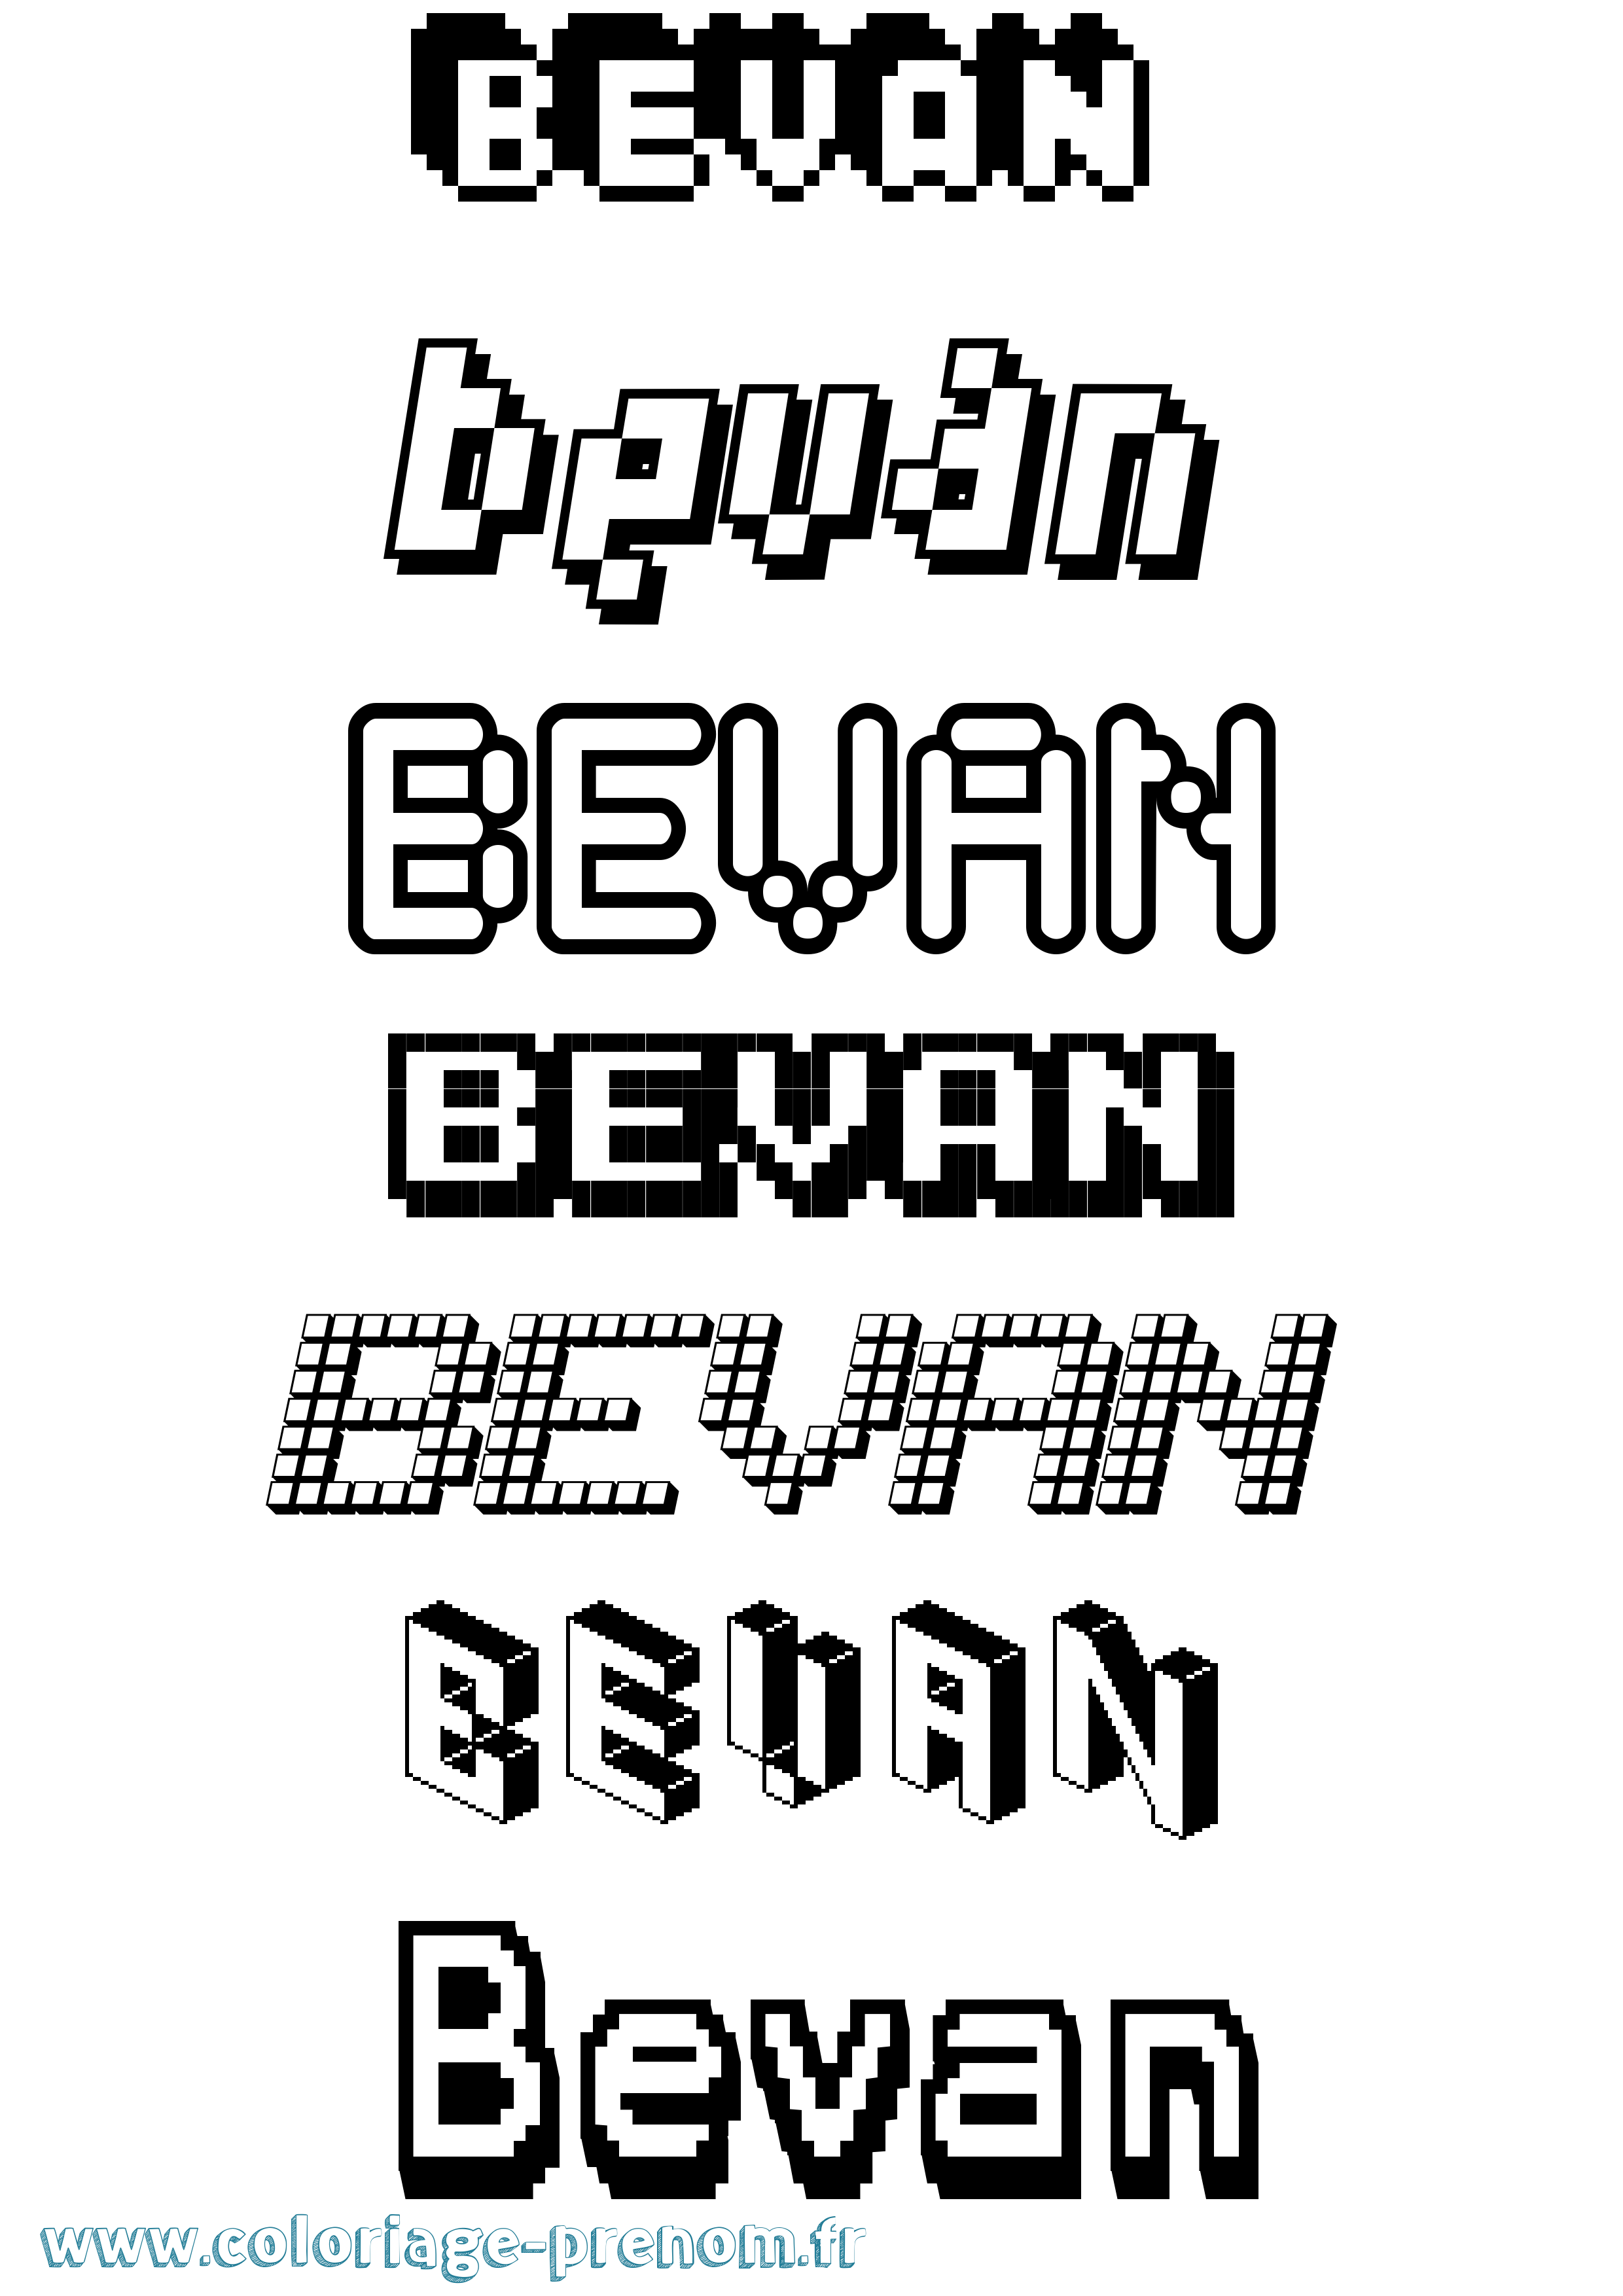 Coloriage prénom Bevan Pixel